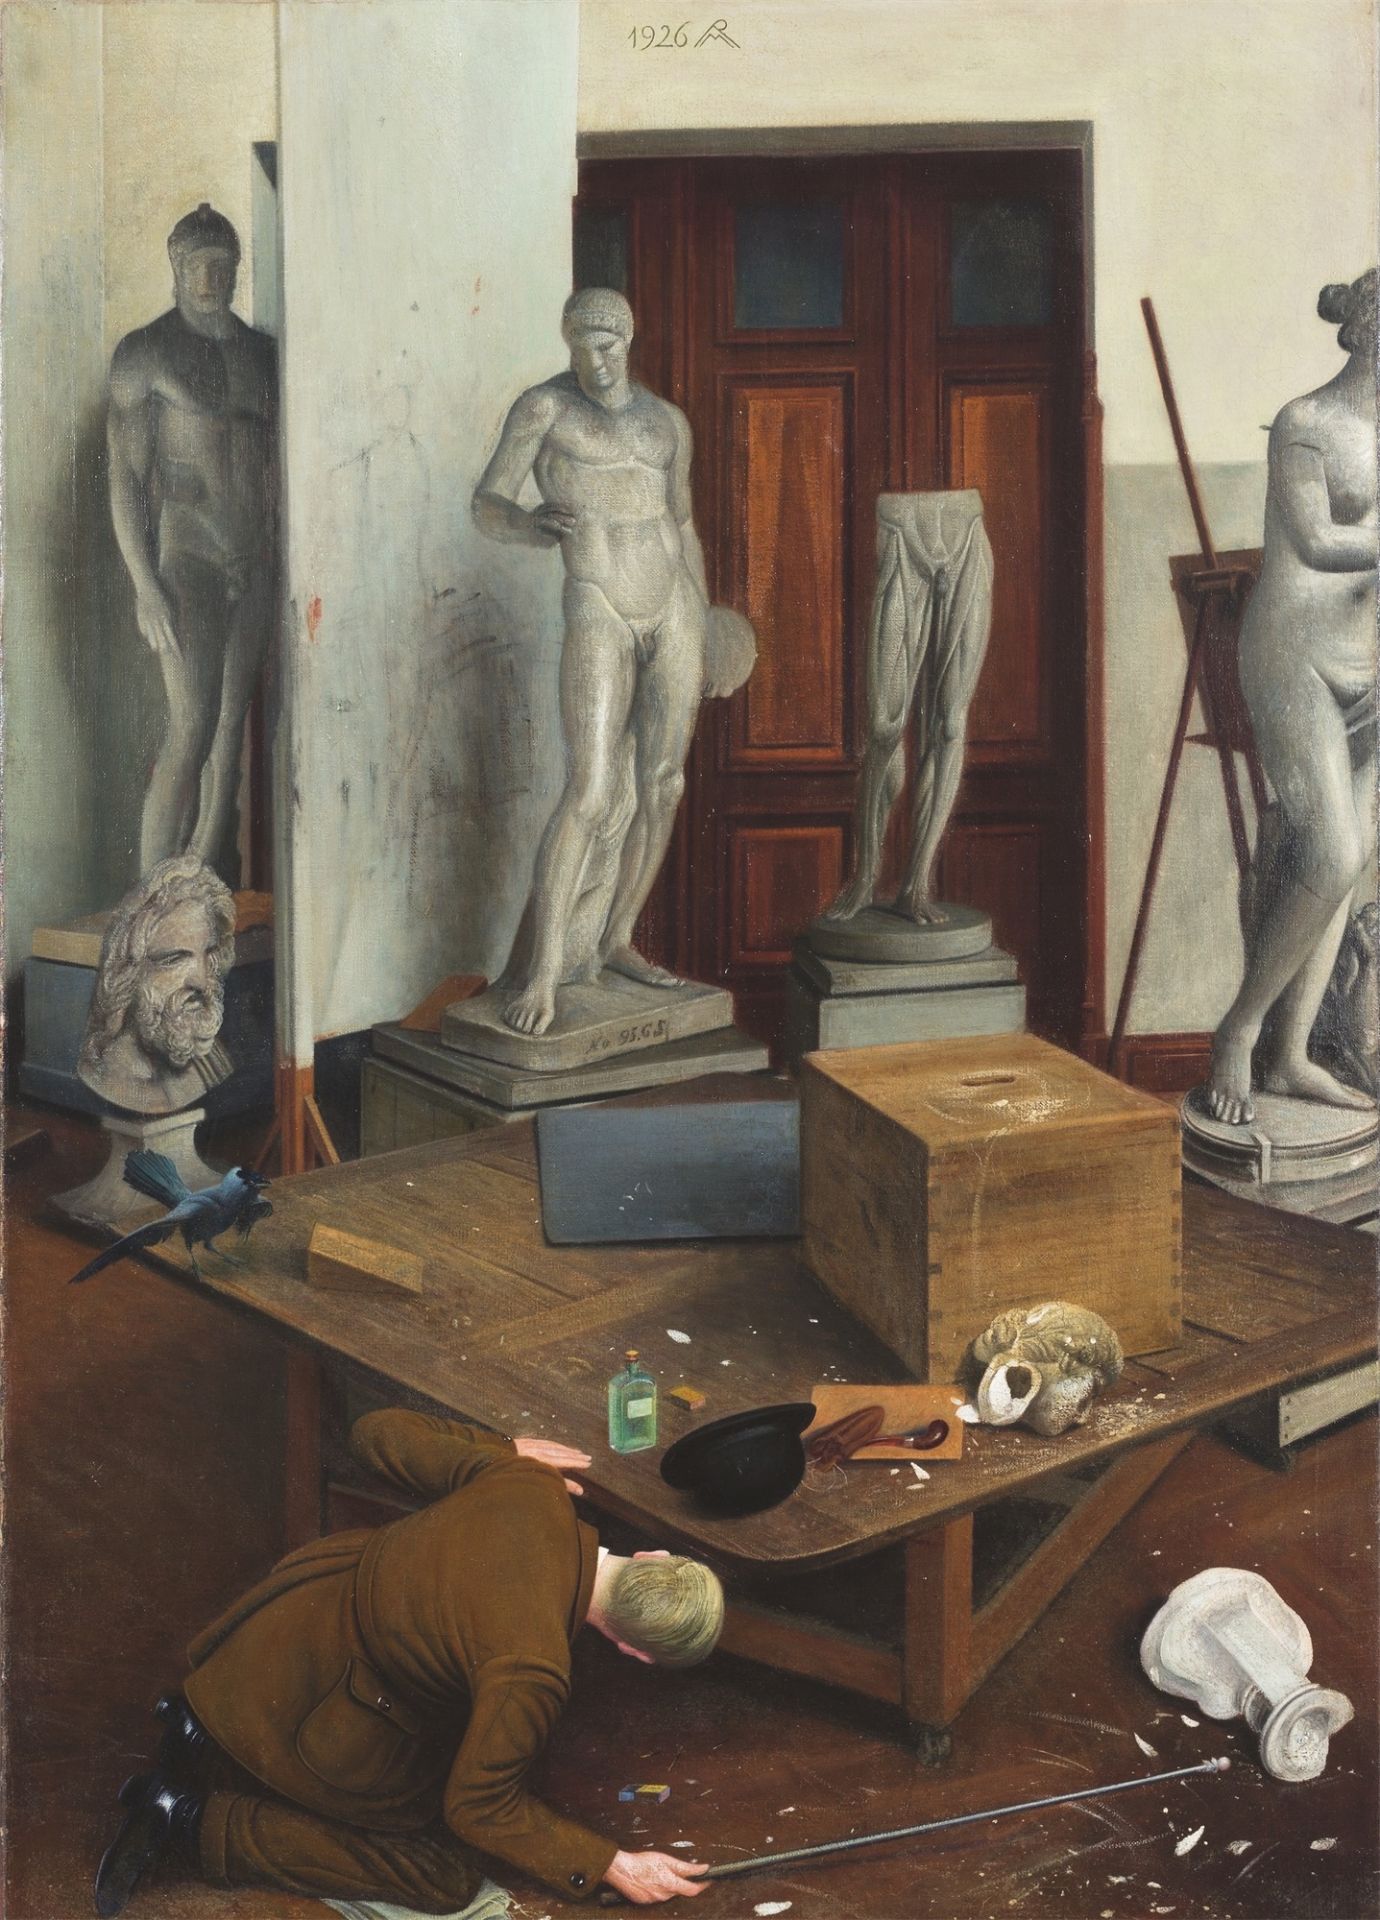 Richard Müller. ”Gipsbüsten im Atelier”. 1926